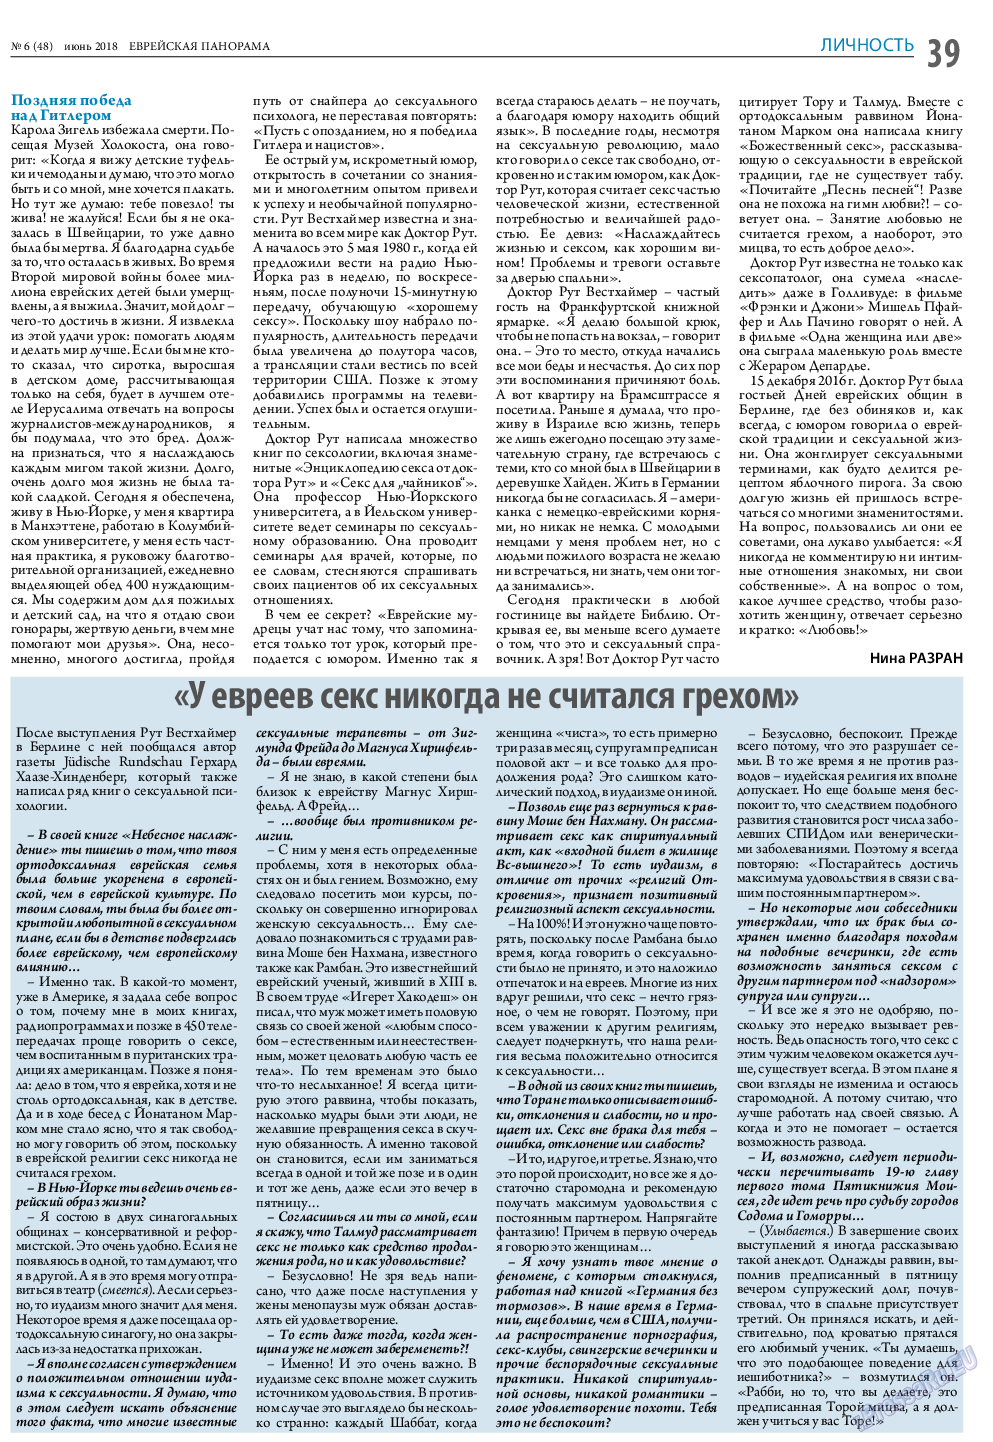 Еврейская панорама, газета. 2018 №6 стр.39